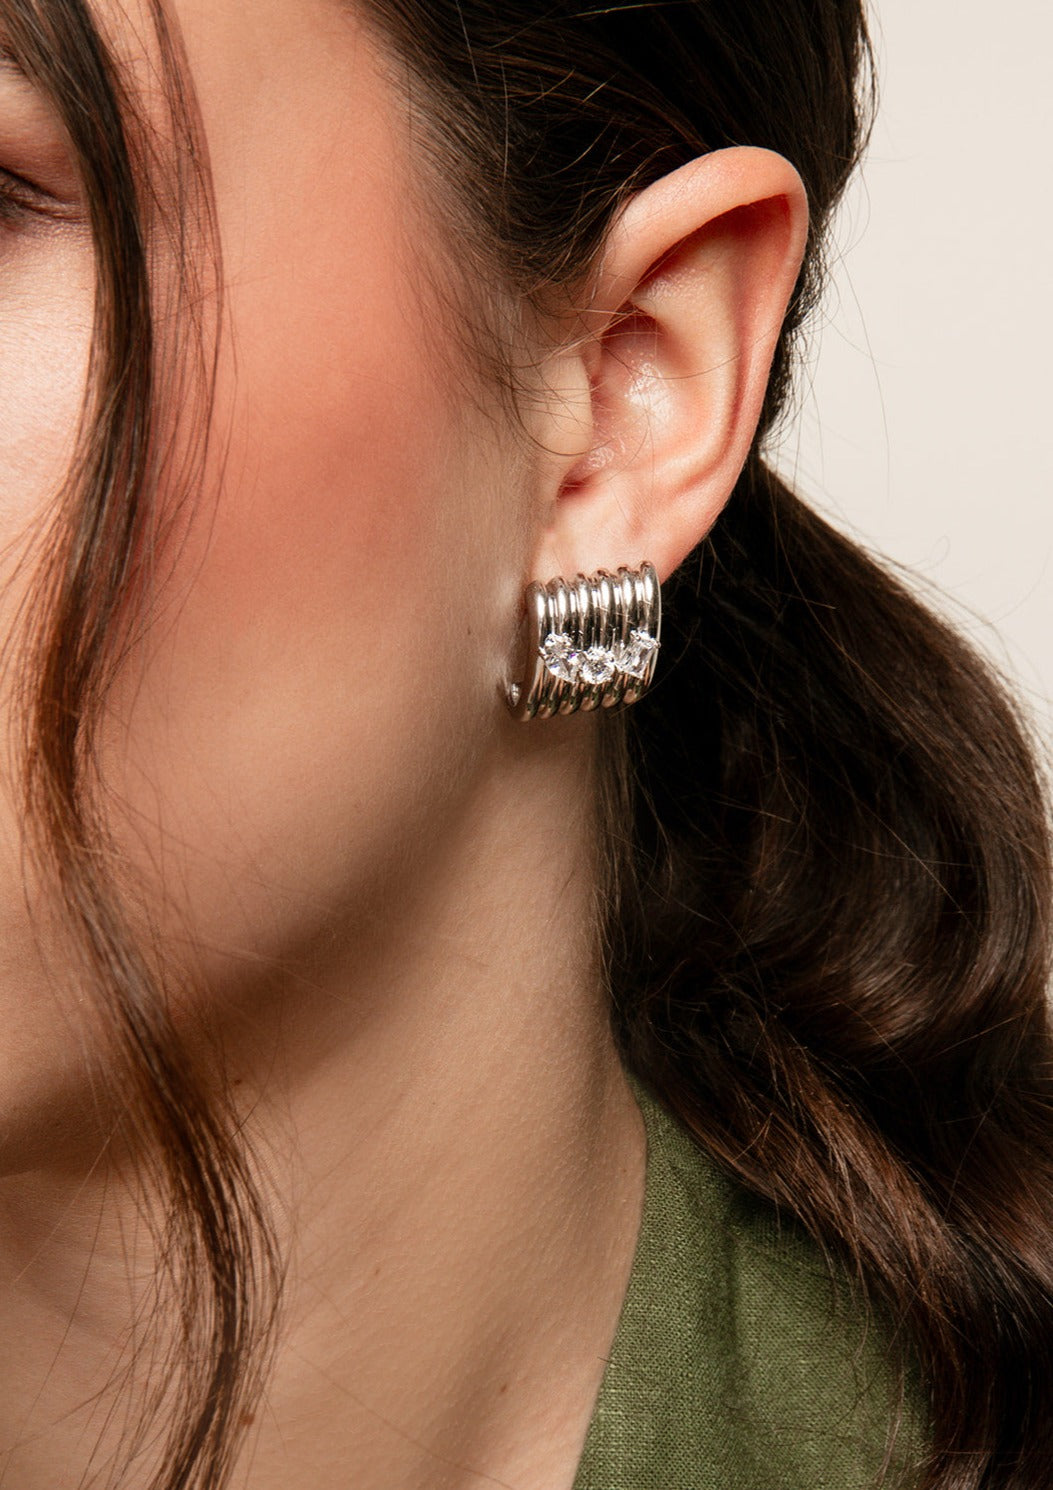 The Silver Sienna Earrings